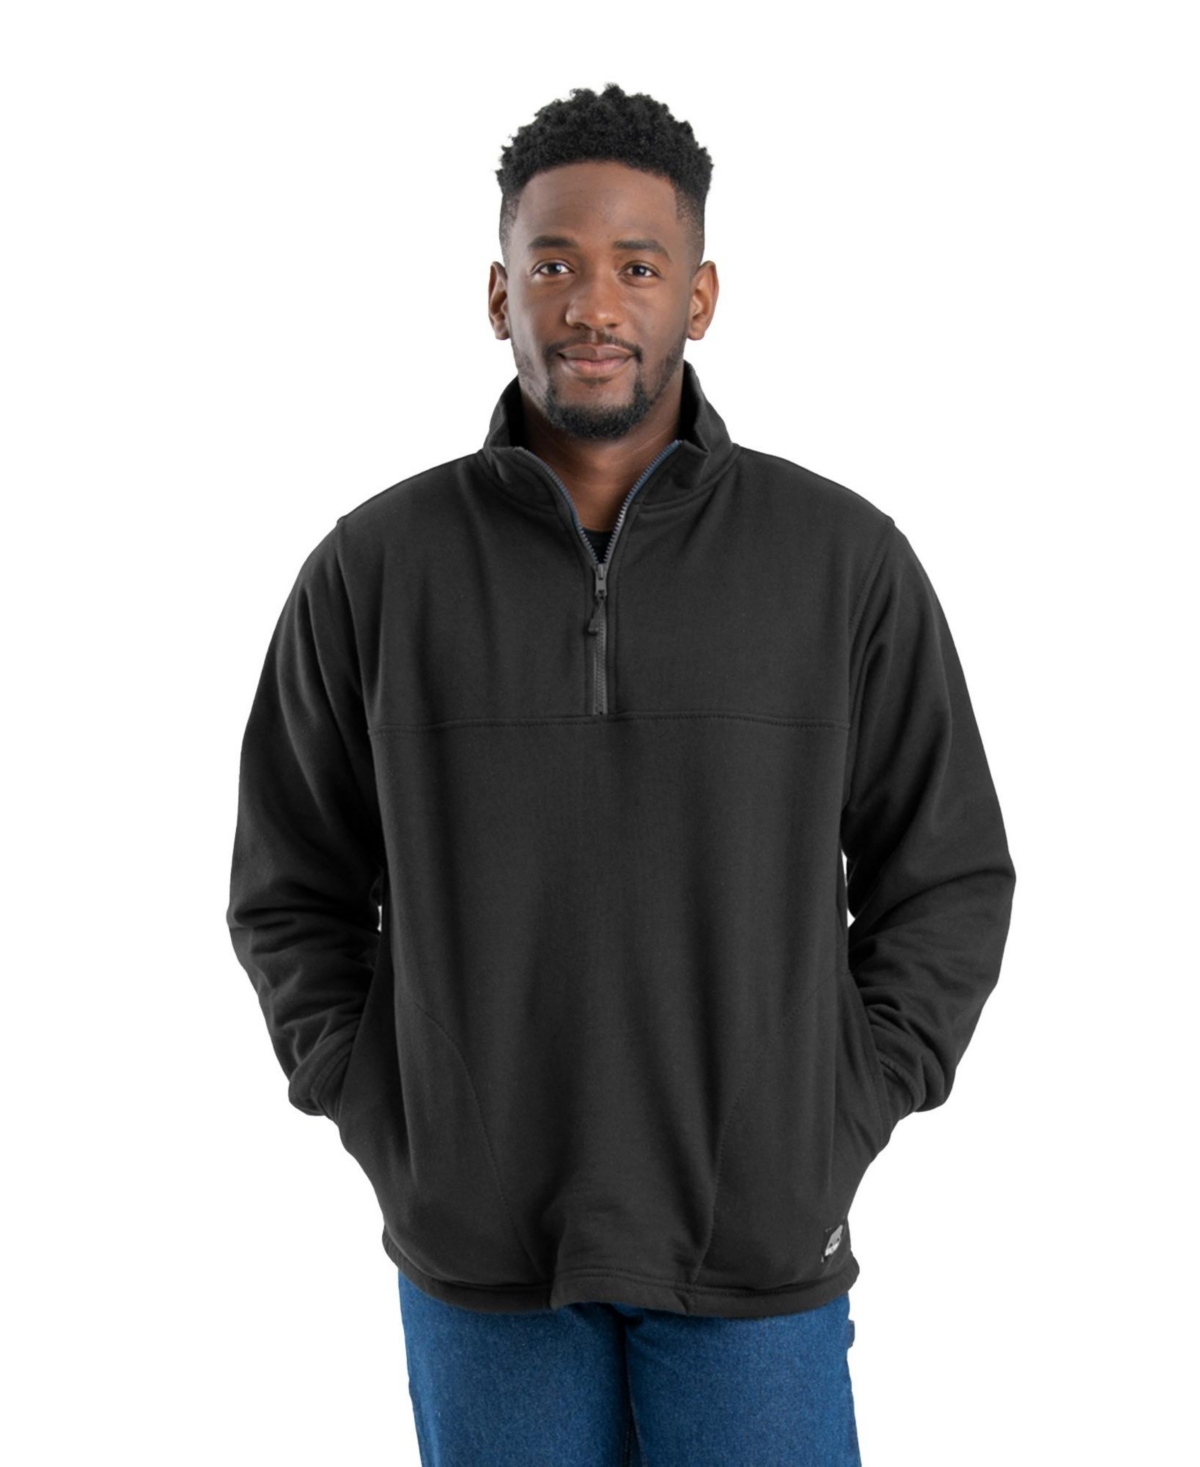 Men's Heritage Thermal-Lined Quarter-Zip Sweatshirt Big & Tall - Black